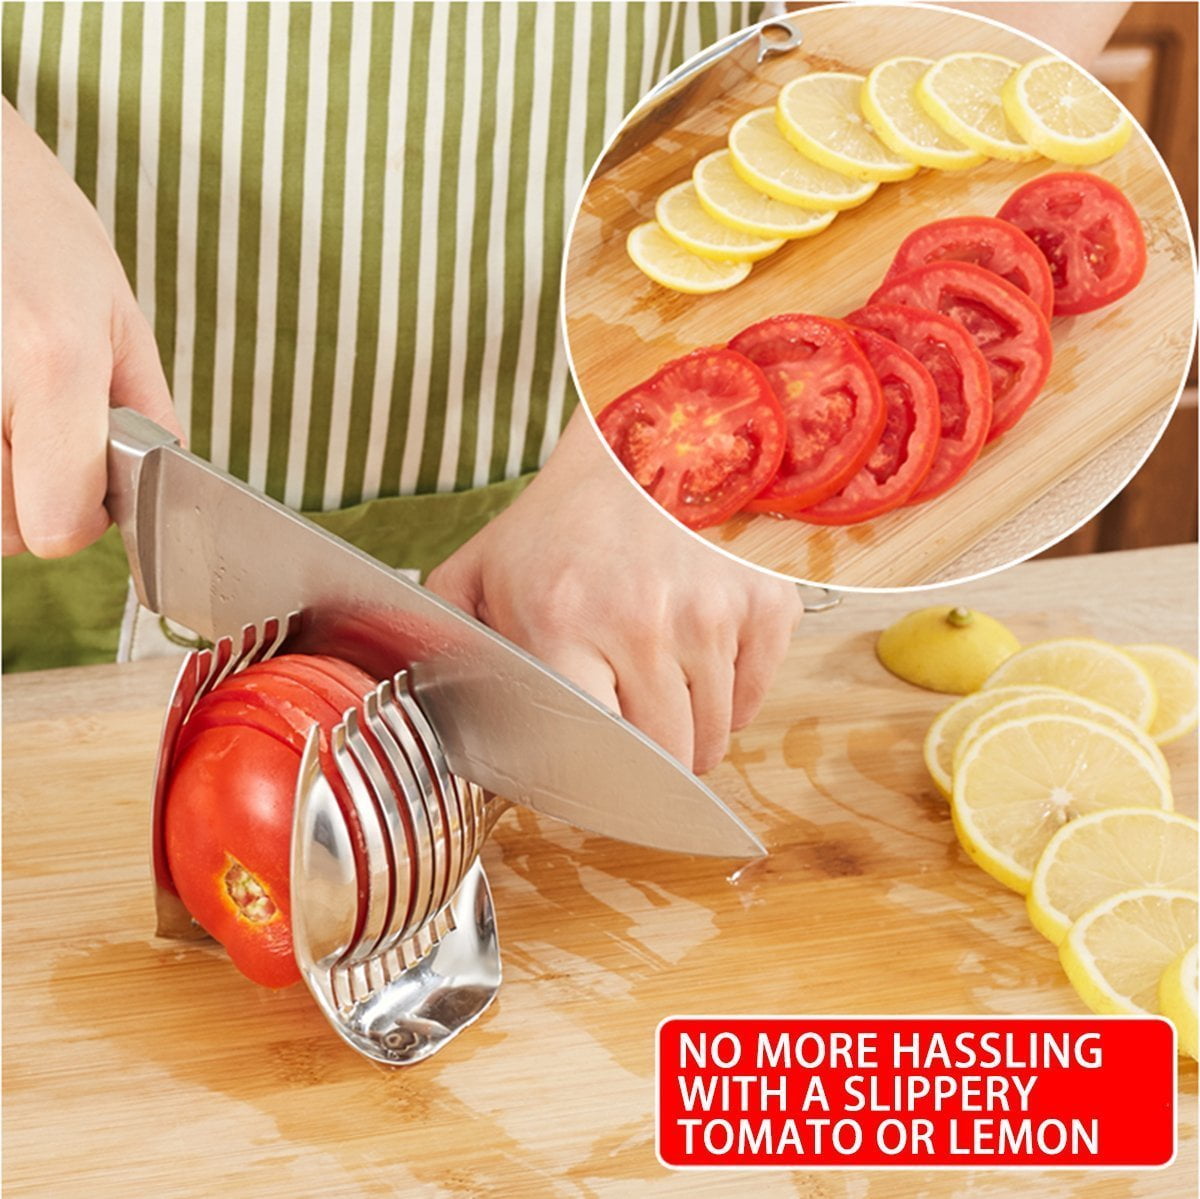 1pc Onion Slicer With Holder & Lemon Slicer, Vegetable Meat Slicing Thin  Tool For Home Kitchen